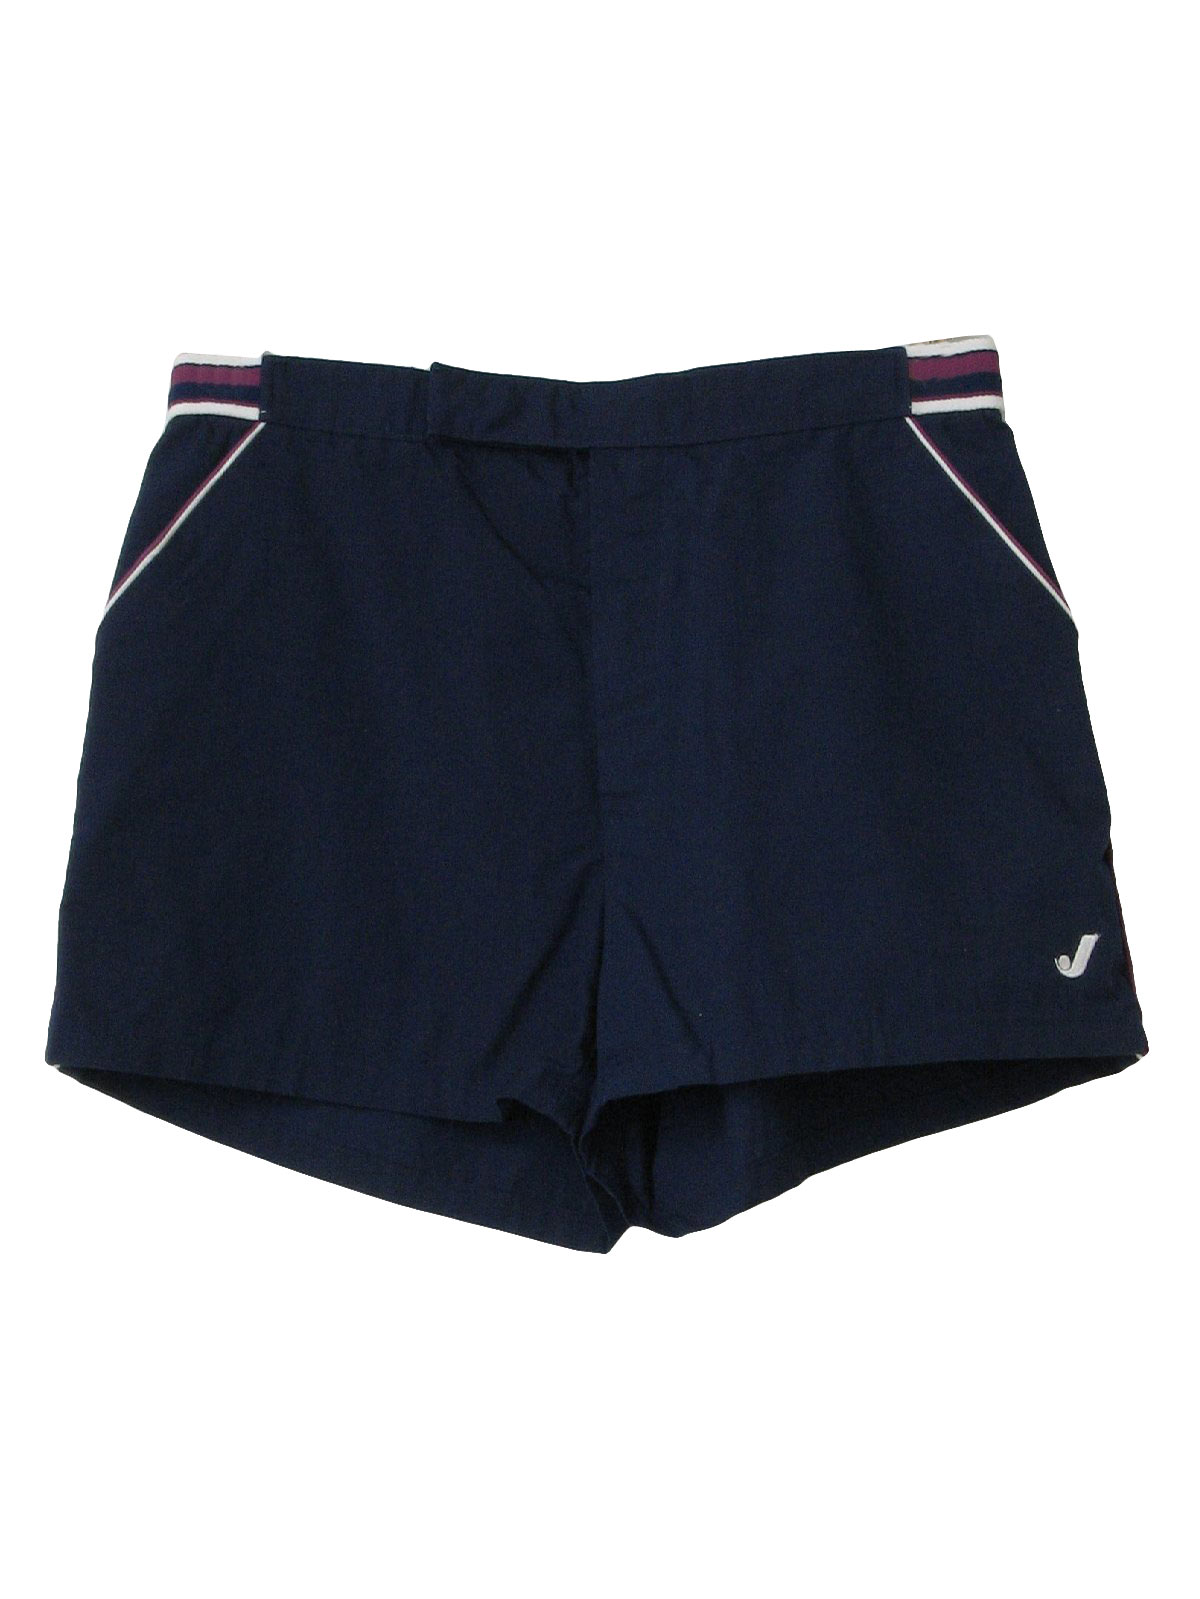 Eighties Jantzen Shorts: 80s -Jantzen- Mens dark blue with white and ...